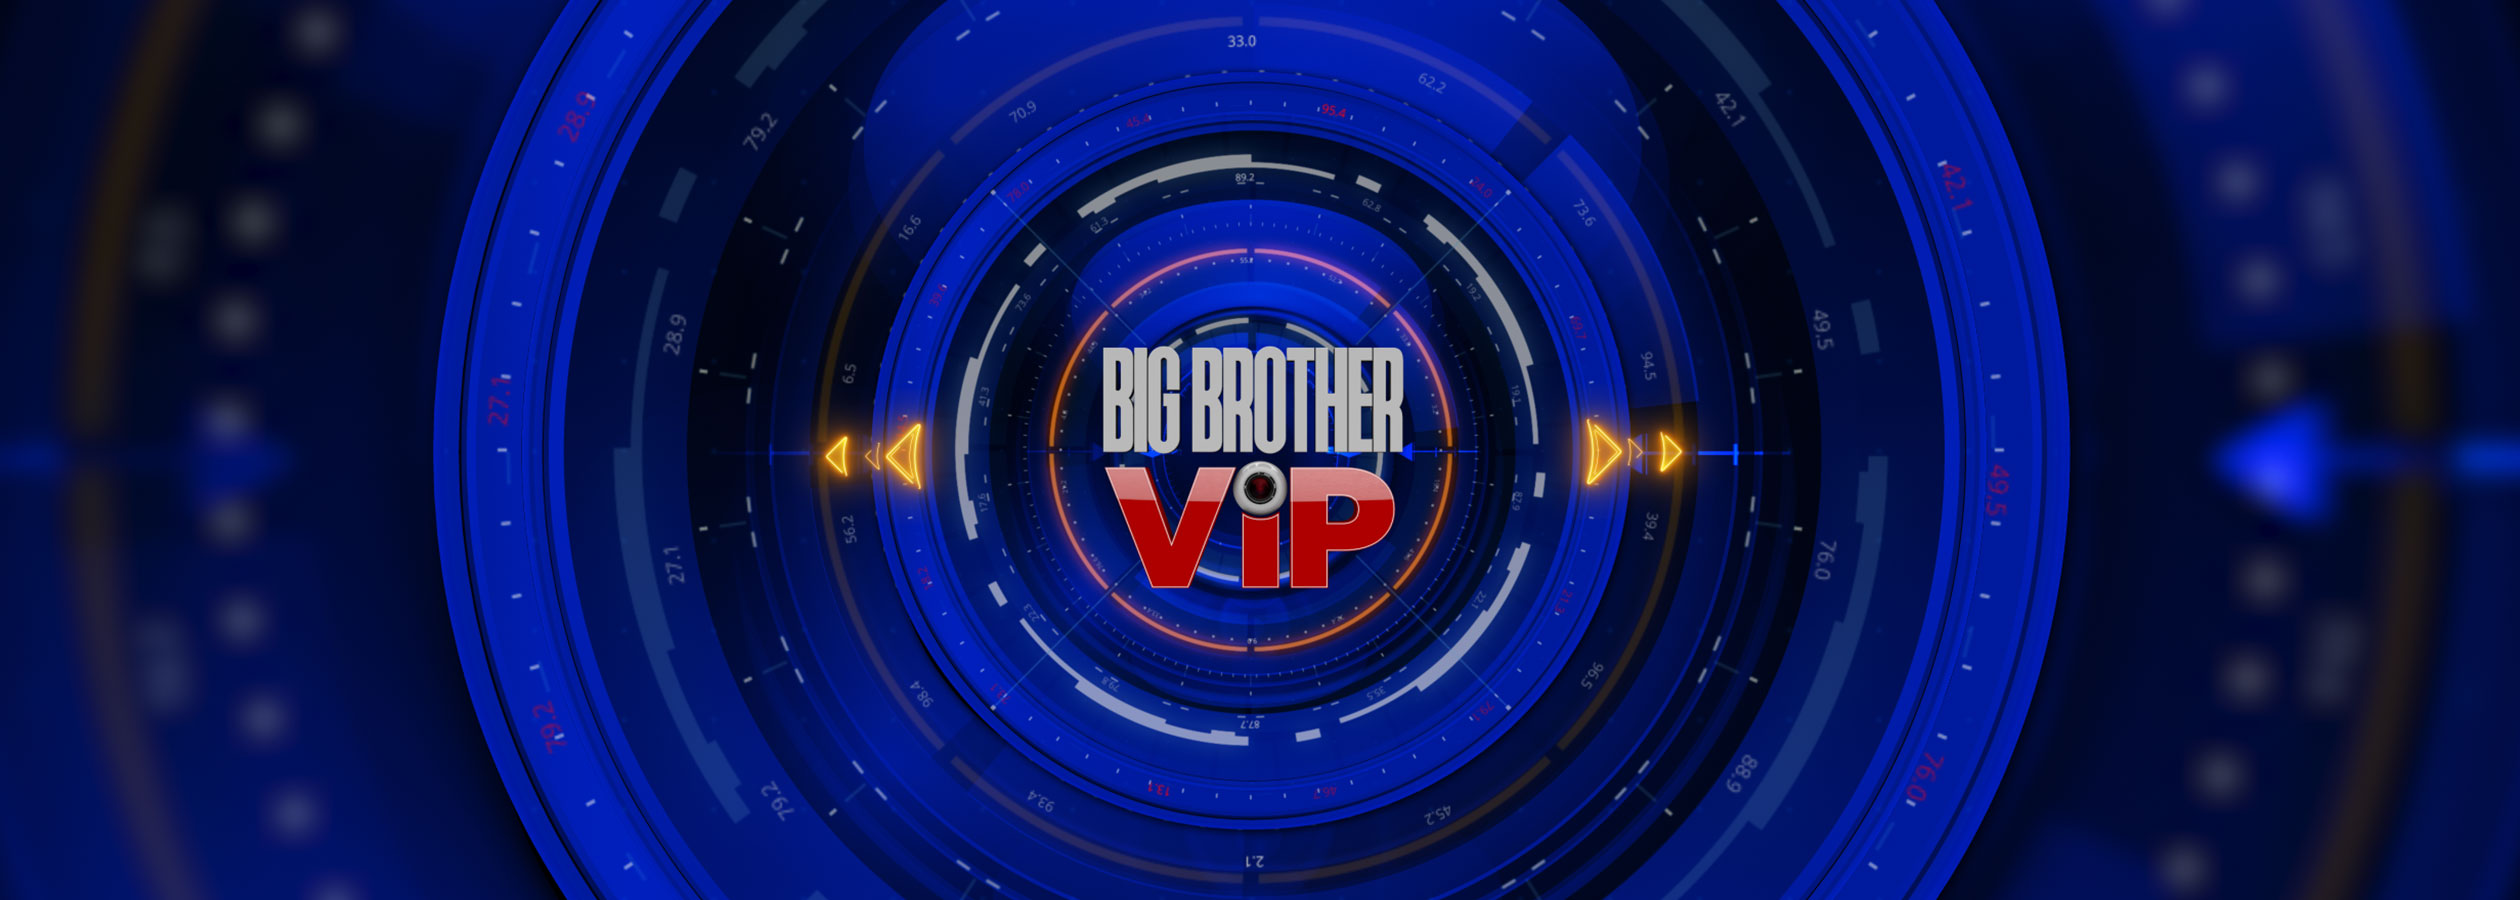 Programe - Top Channel - Lajmet fundit minute pas minute, sport, Portokalli, Fare, Top Story, Perputhen, Big Brother Albania, Brother VIP, Shqiperia Live